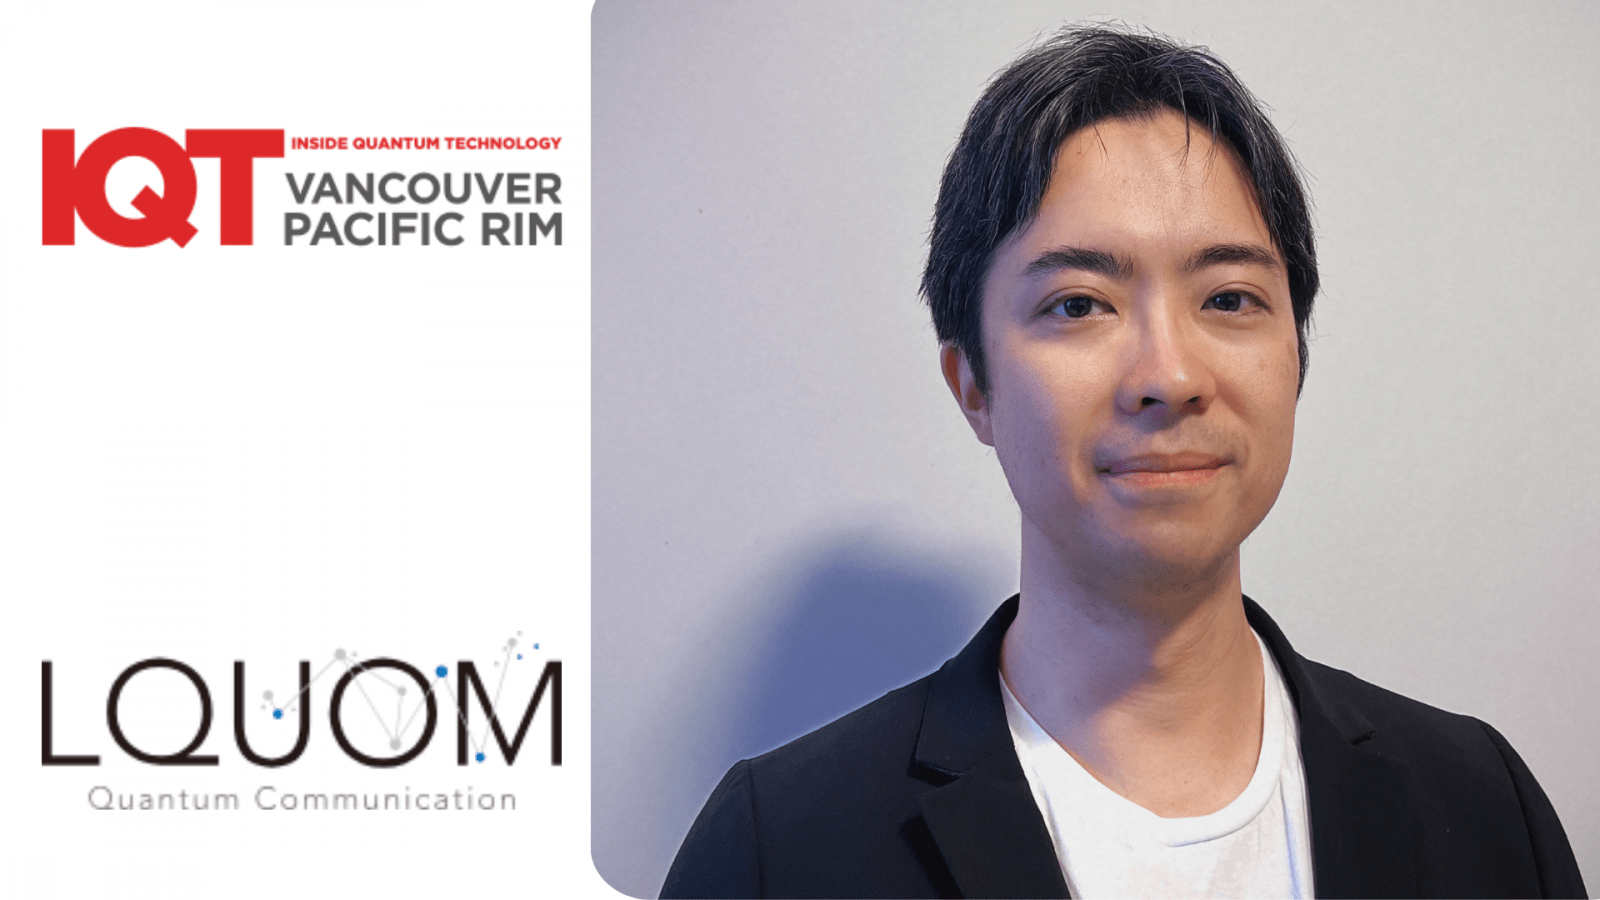 Yuya Mochizuki, CFO of LQUOM is a 2024 Speaker at the IQT Vancouver/Pacific Rim conference in June